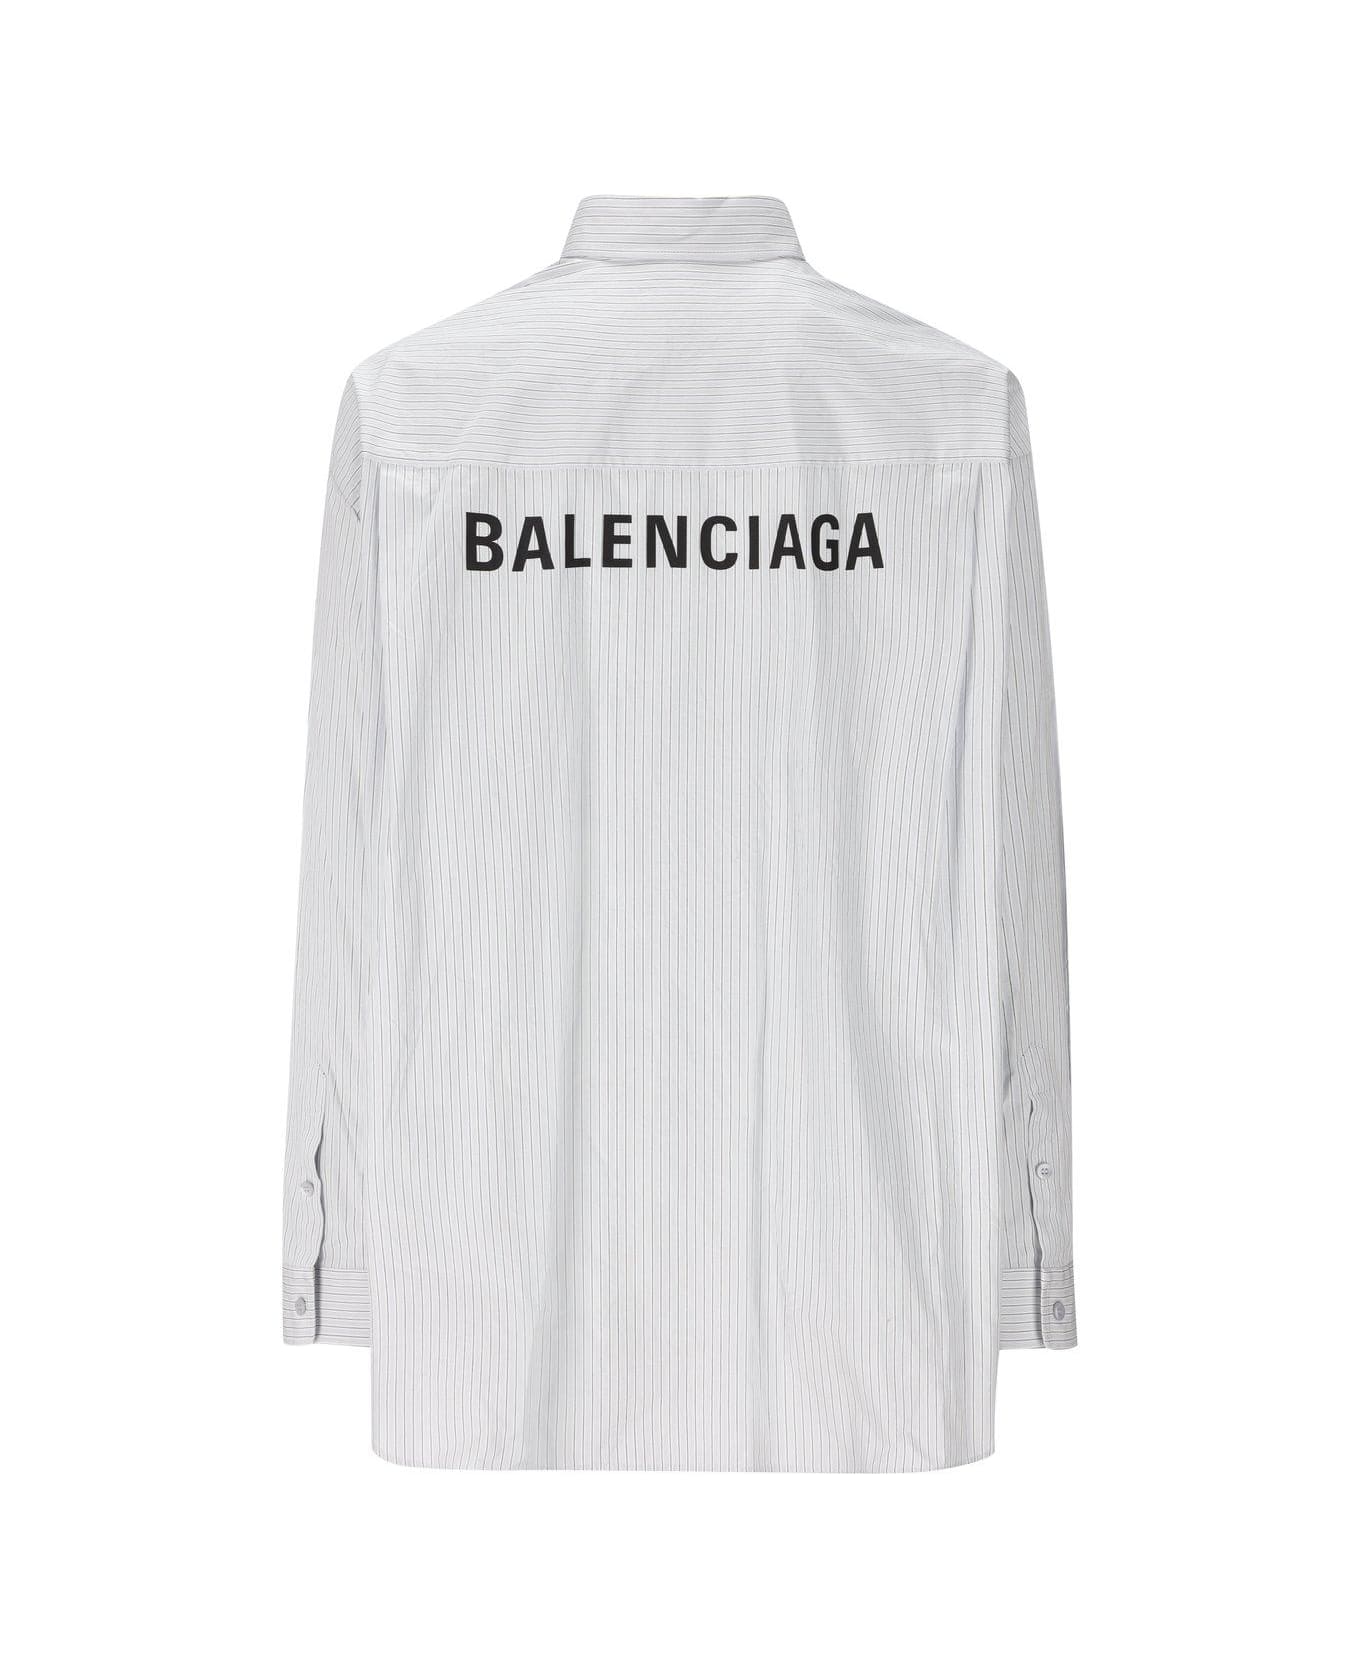 Balenciaga Logo Printed Oversized Shirt - LIGHT BLUE/WHITE